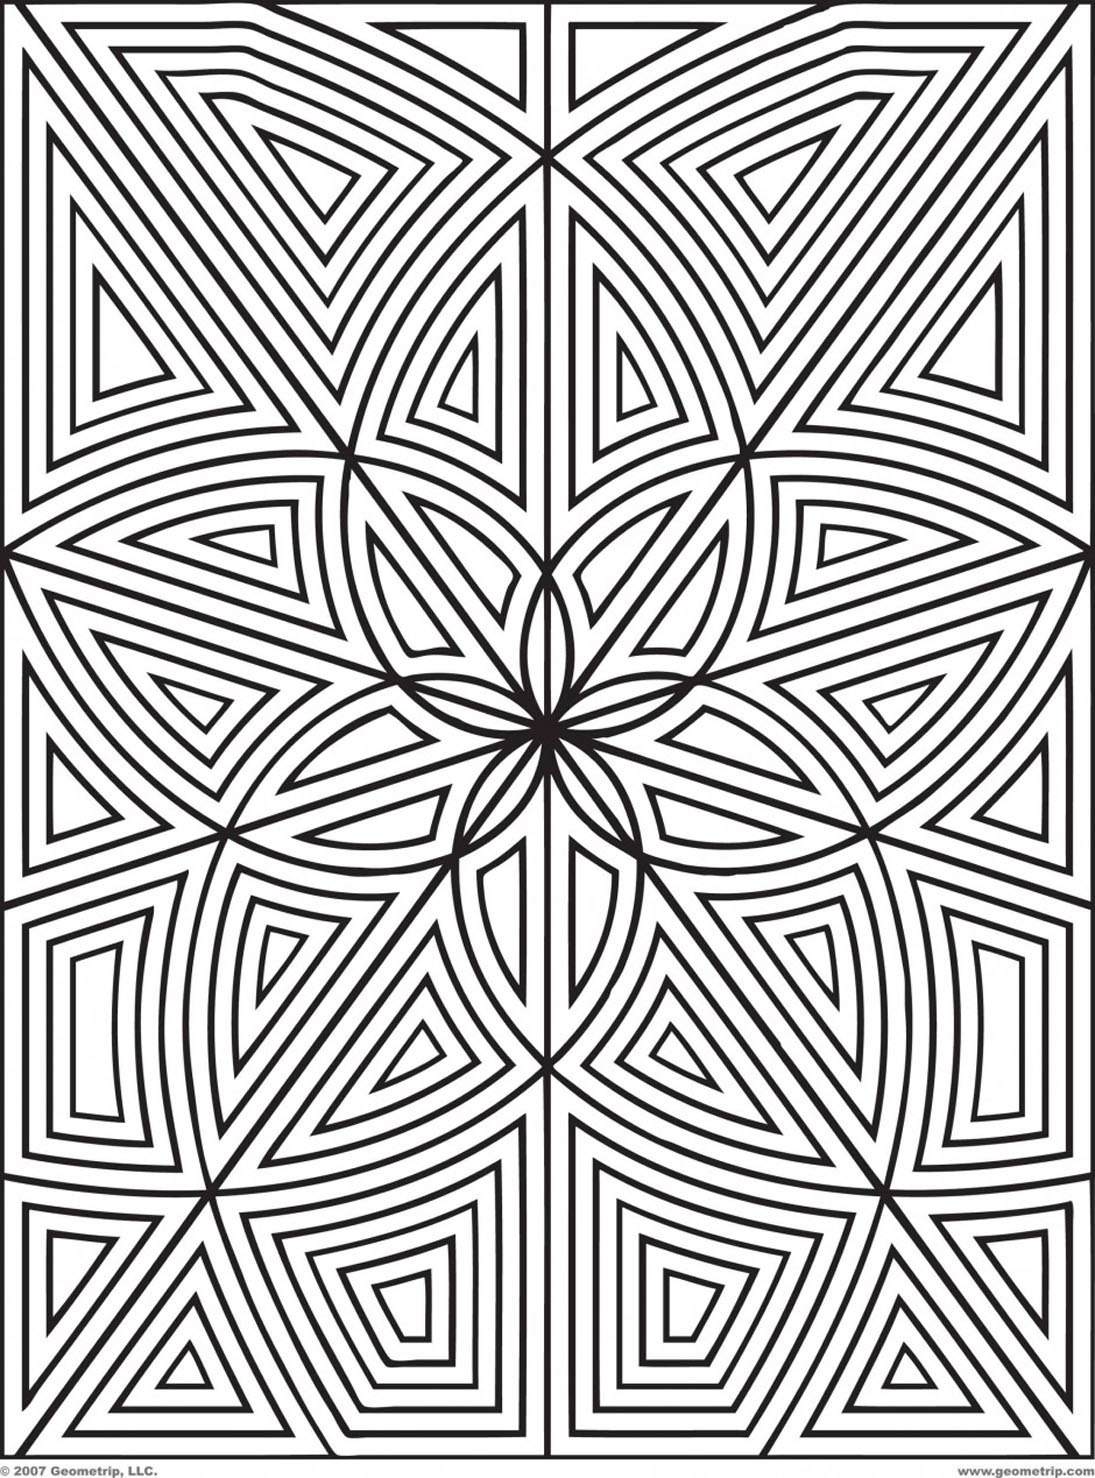 Maze zen flowers - Image with : Geometry, Symmetry